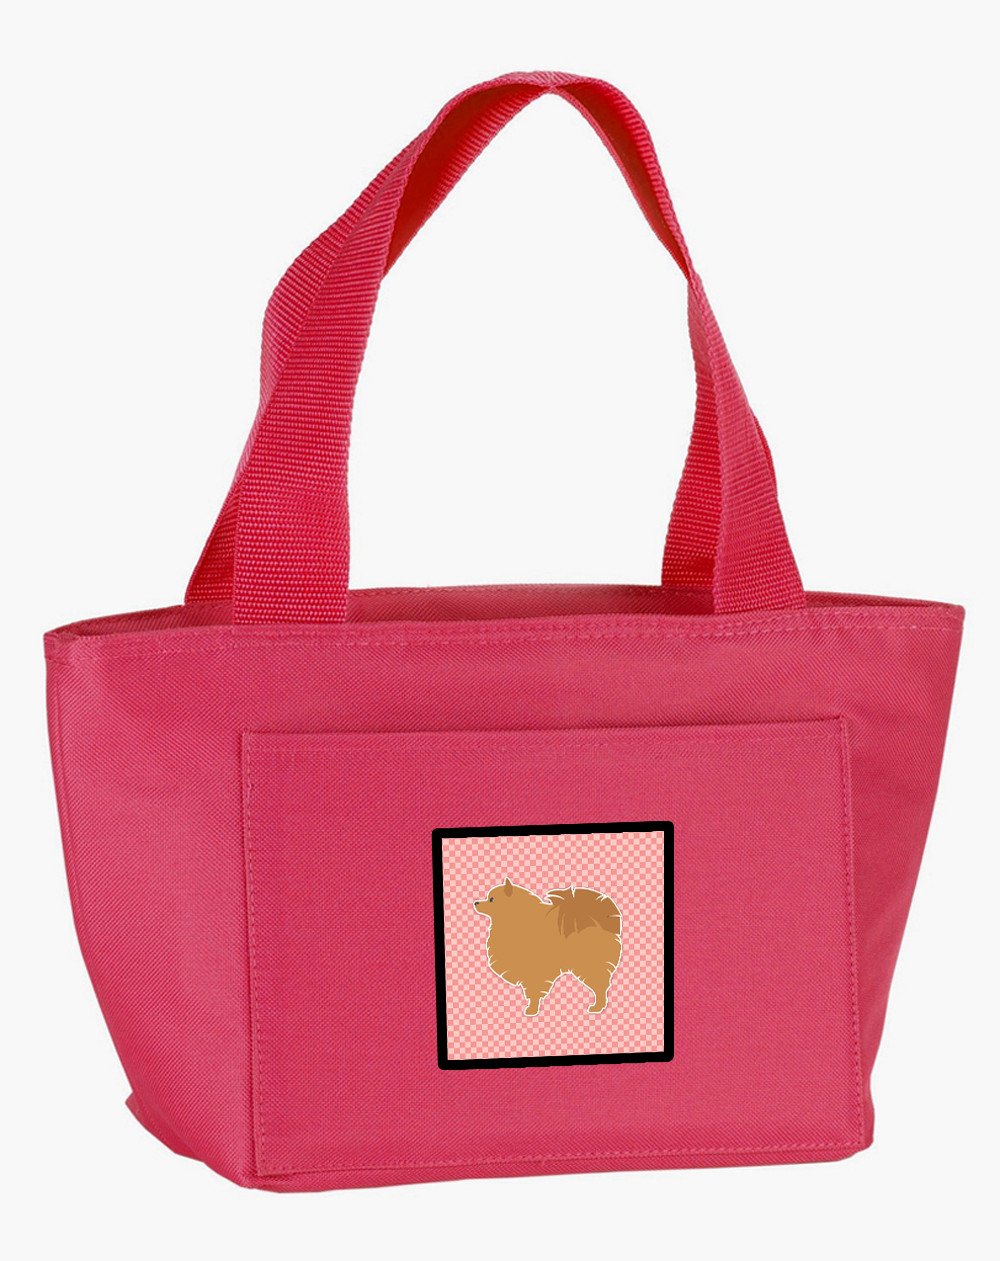 Pomeranian Checkerboard Pink Lunch Bag BB3642PK-8808 by Caroline's Treasures